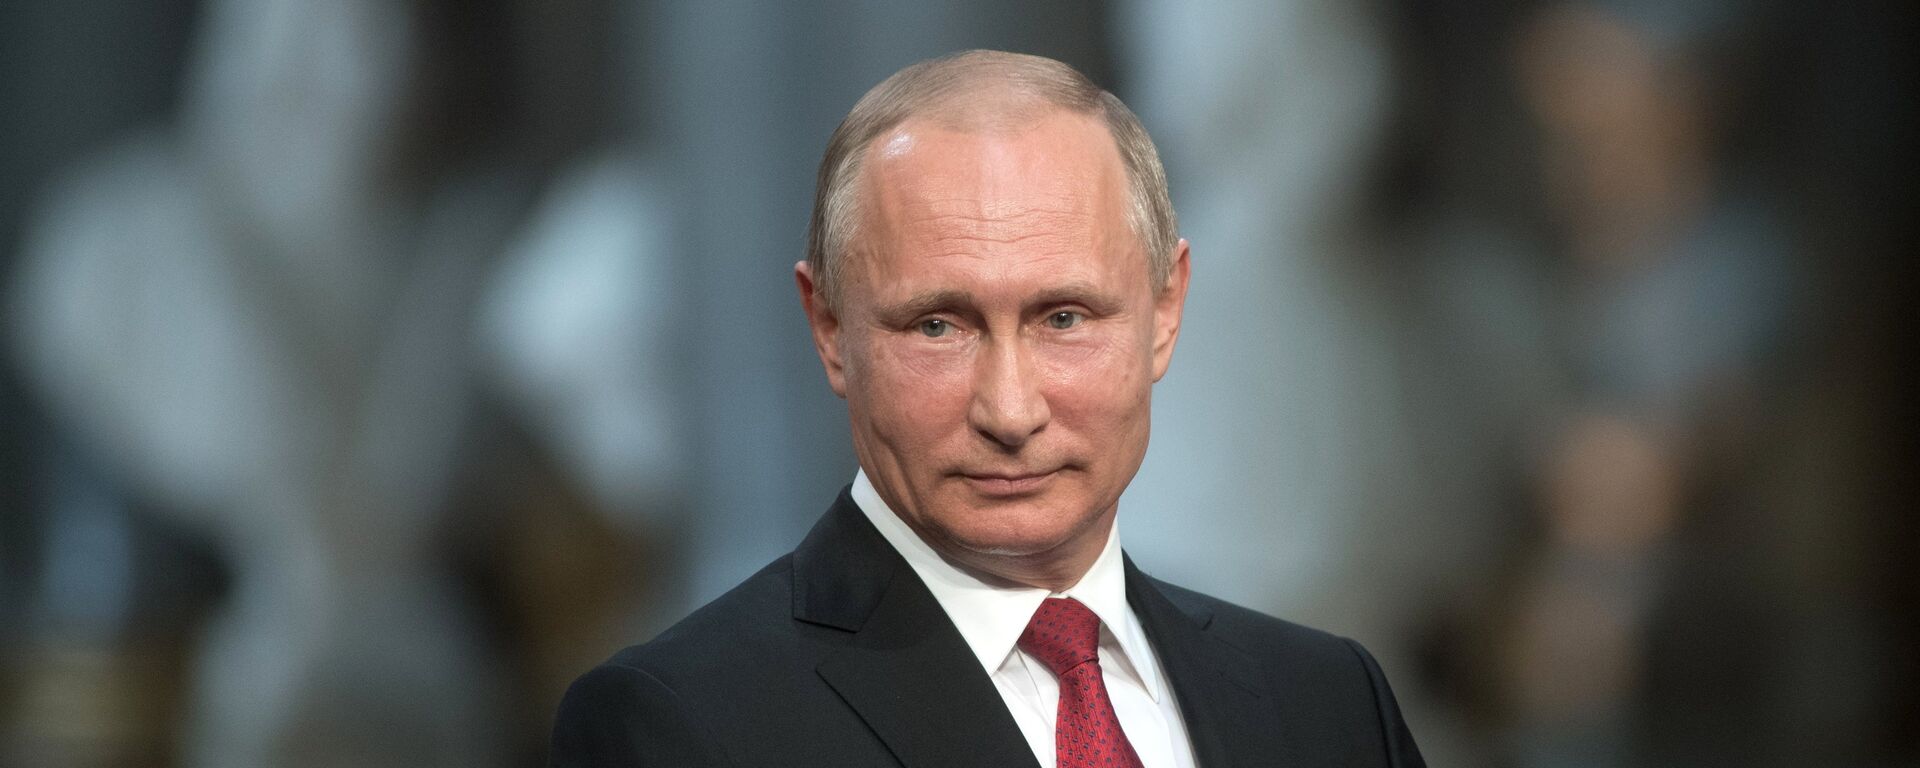 Президент РФ Владимир Путин - Sputnik Латвия, 1920, 20.02.2018